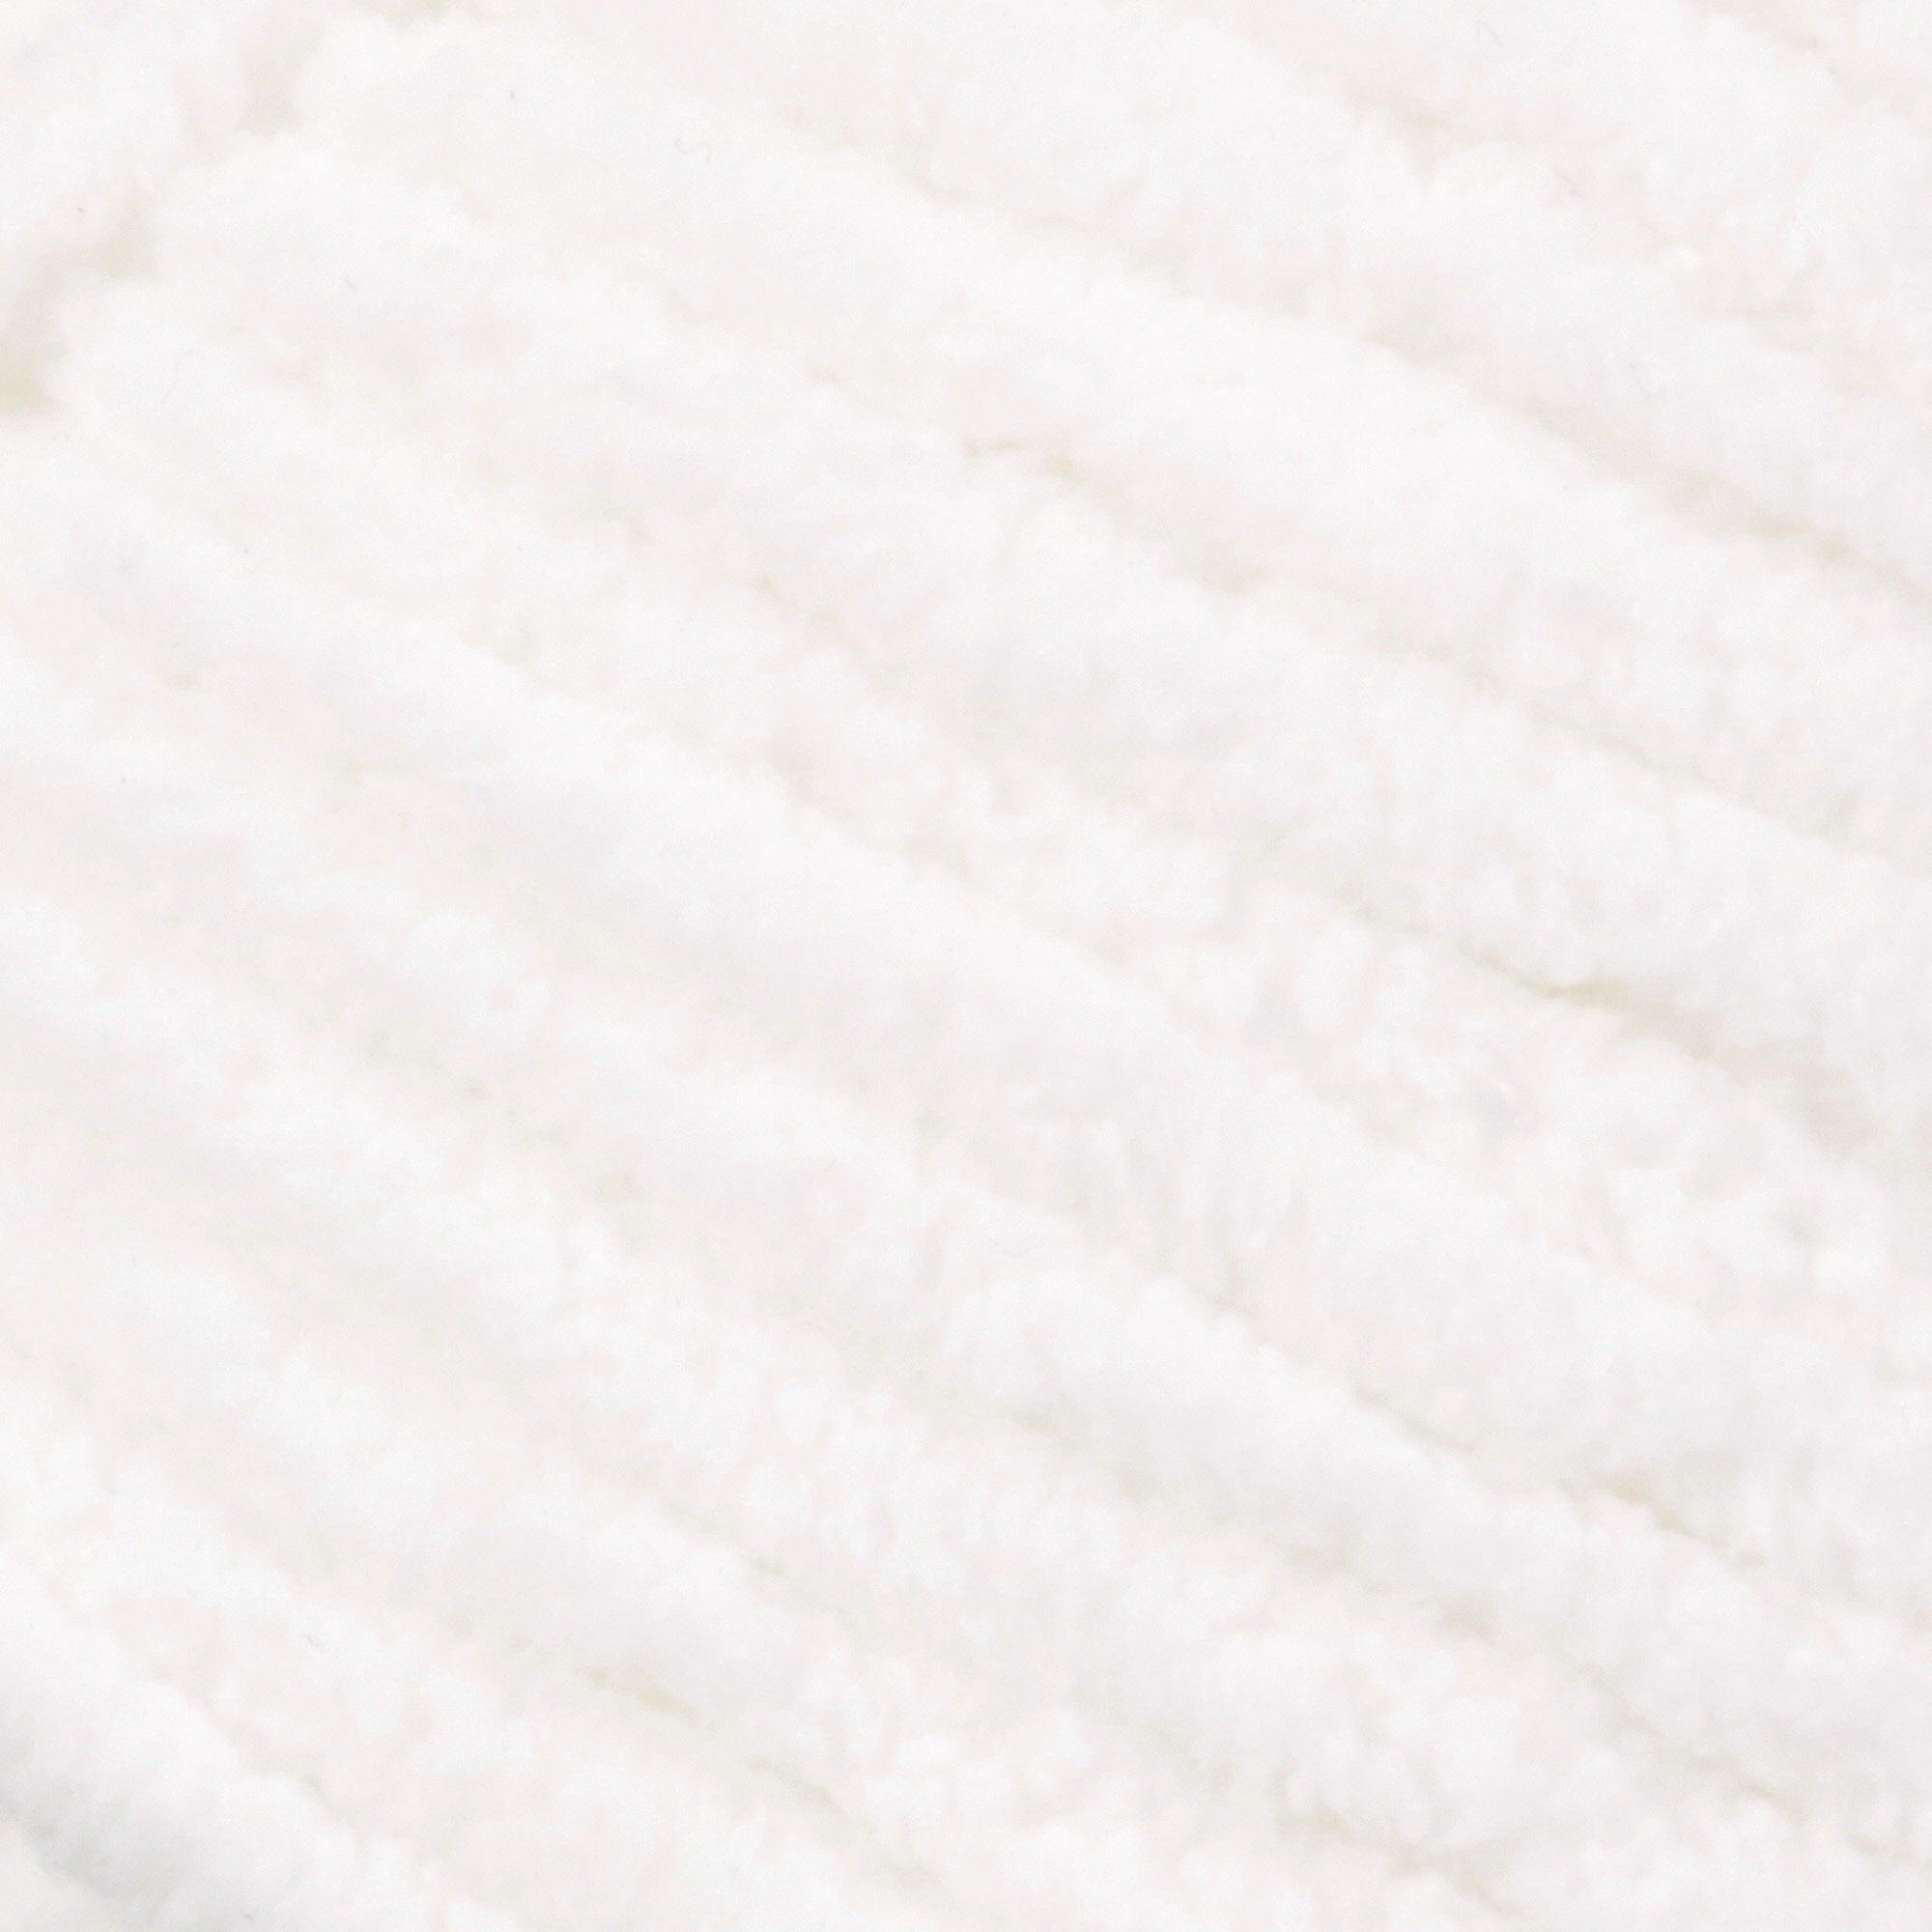 Bernat® Baby Blanket™ #6 Super Bulky Polyester Yarn, Funny Prints